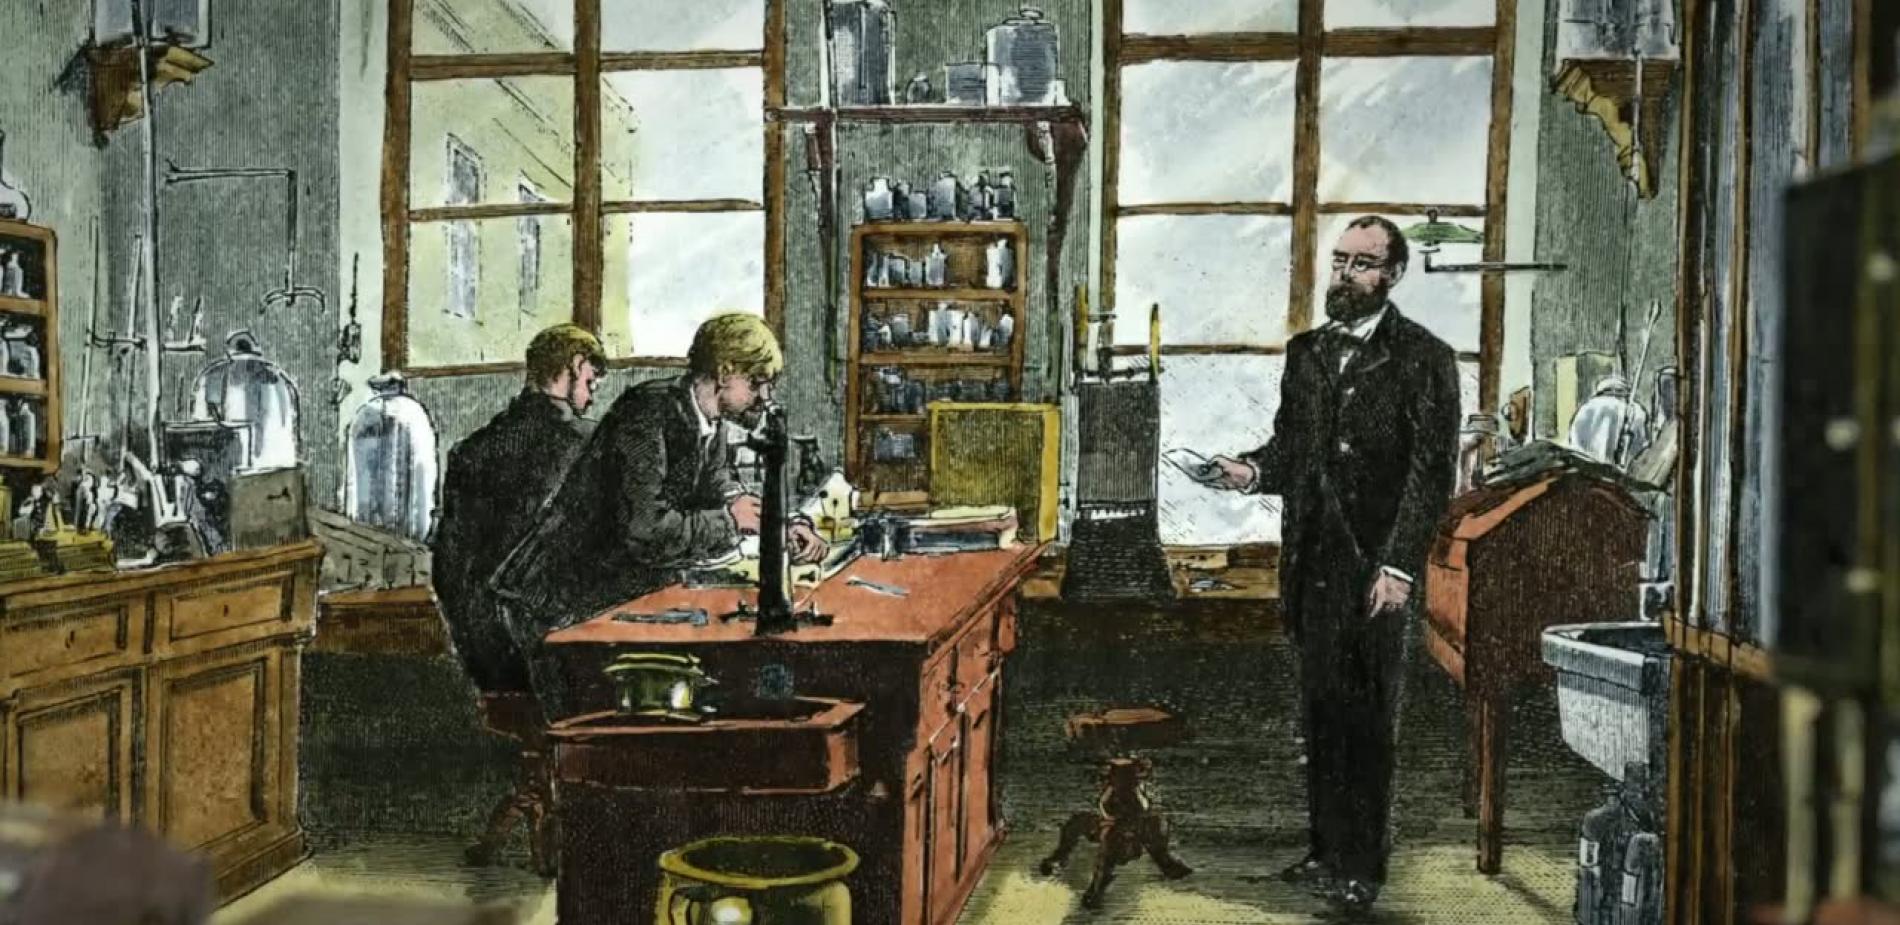 1882, Metchnikoff et la phagocytose